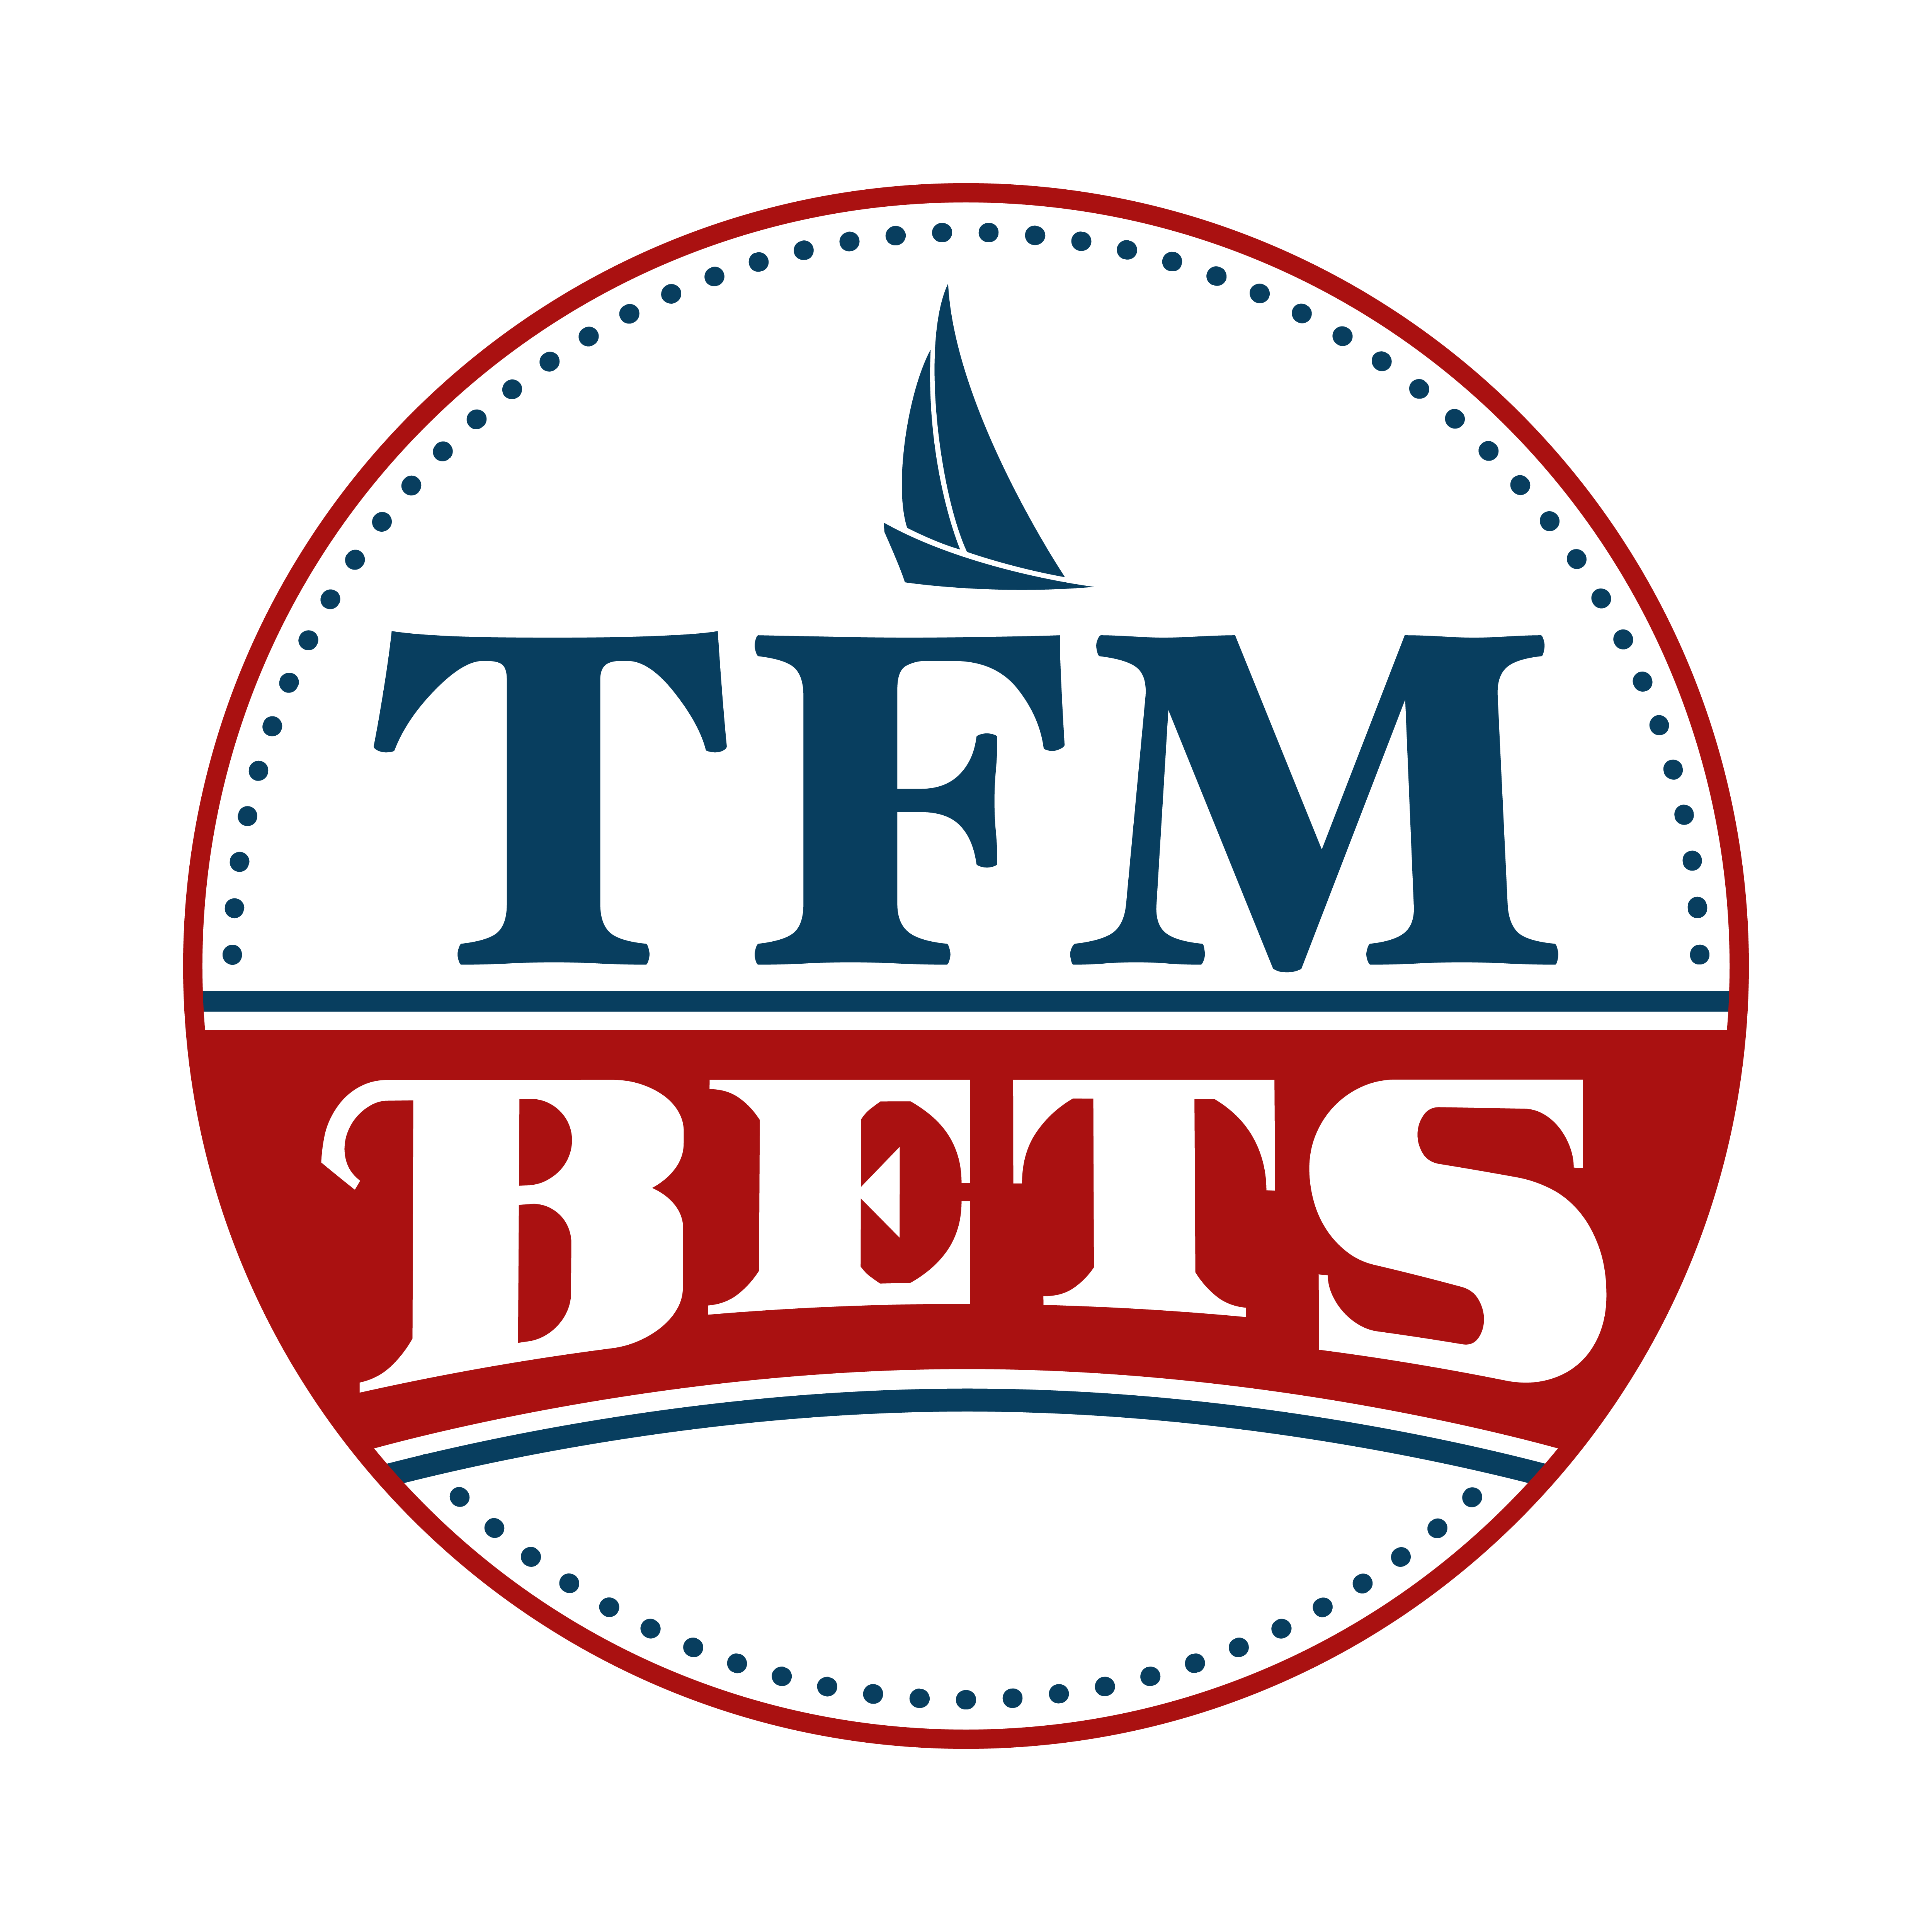 tfm bets logo